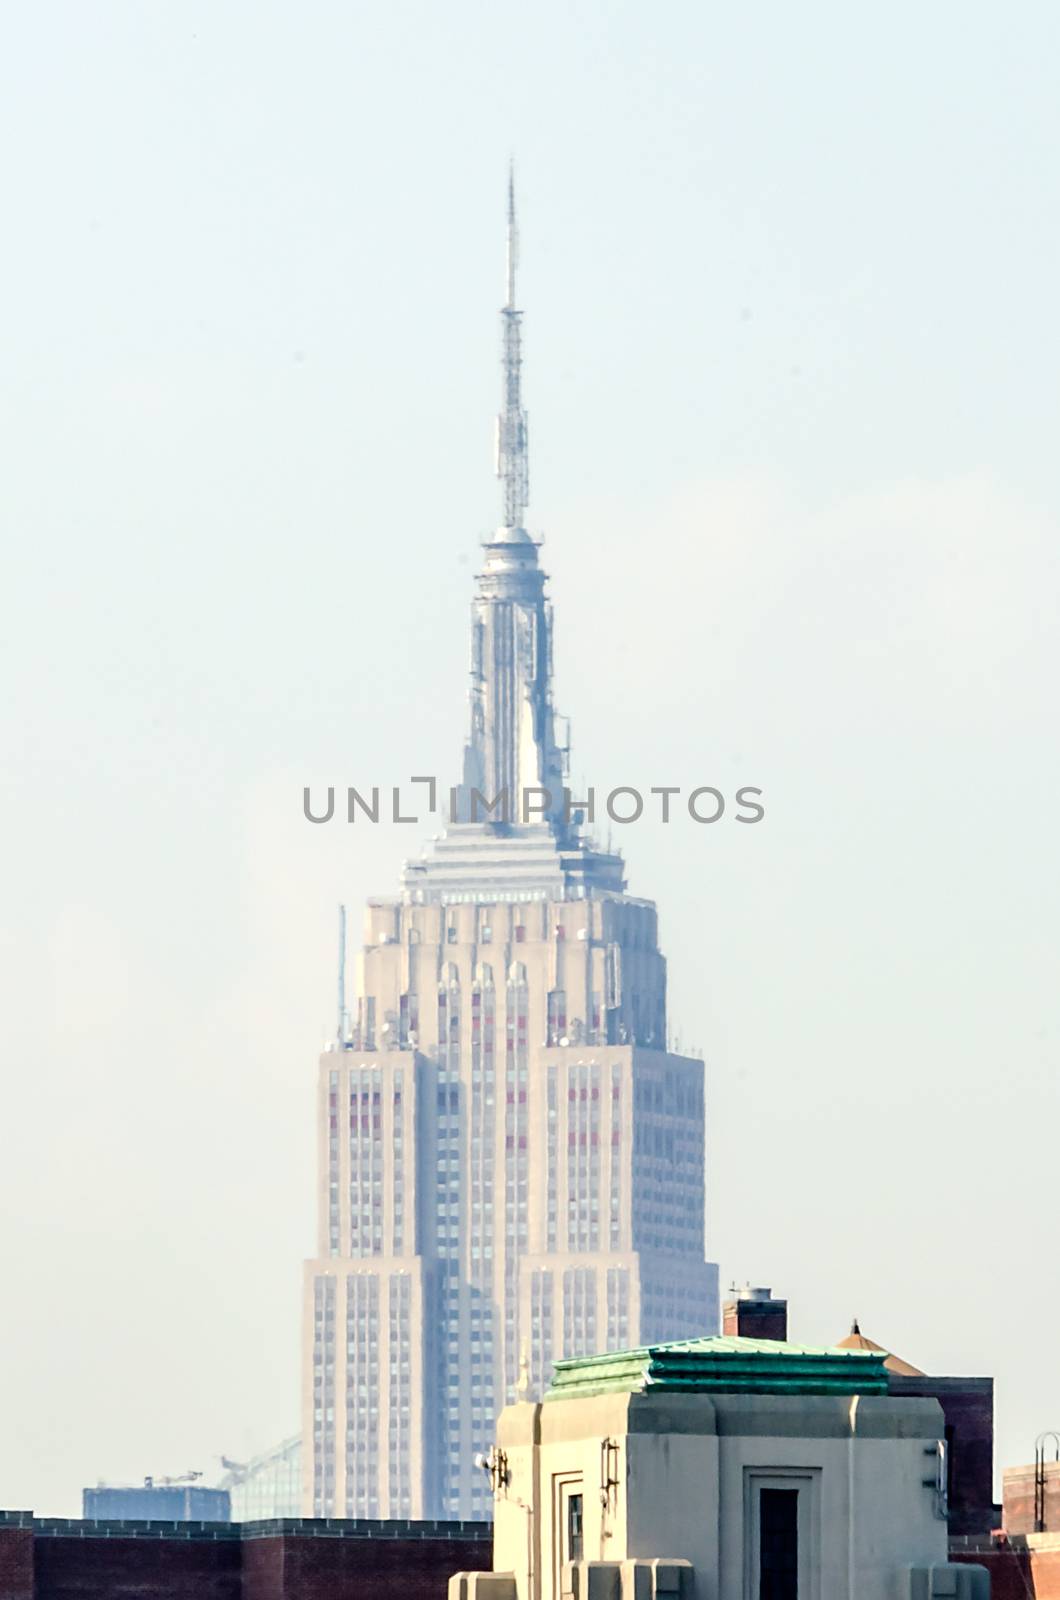 The Empire State Building, New York City by marcorubino